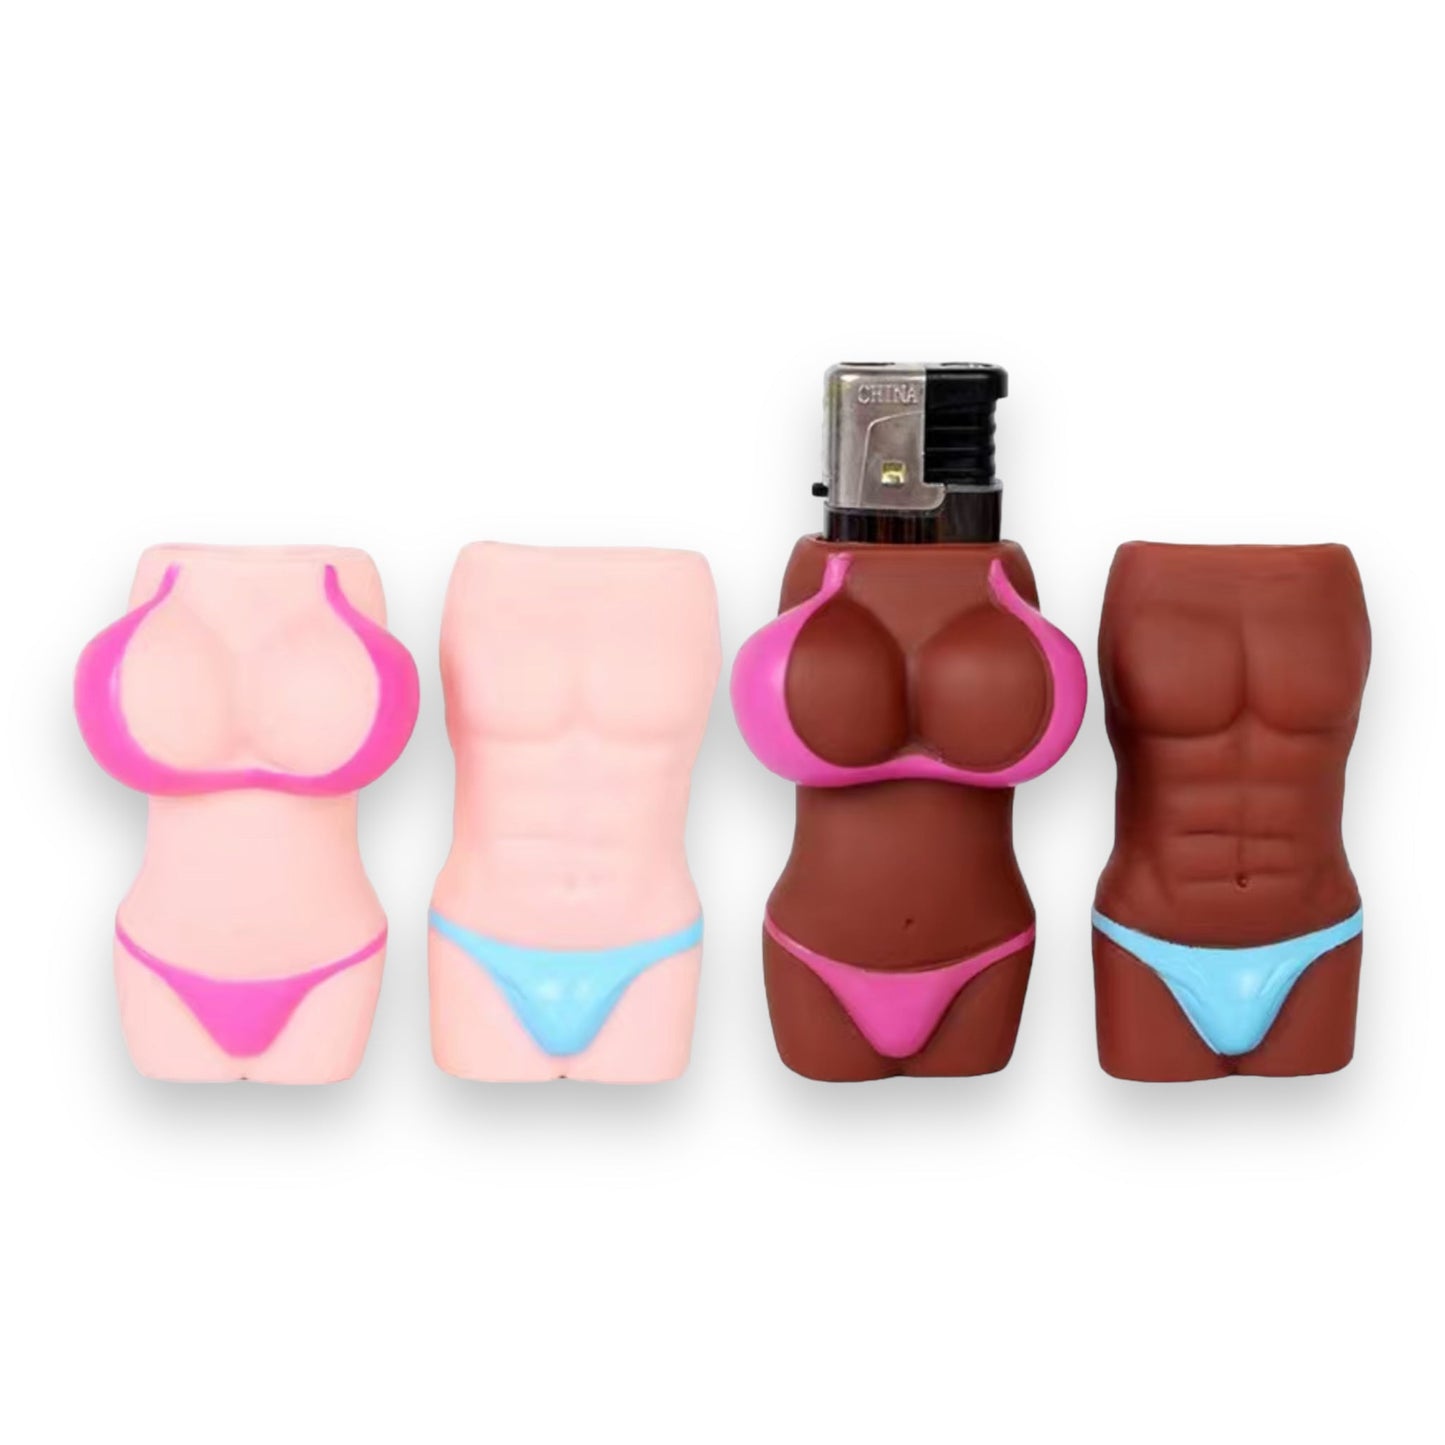 Kinky Pleasure - KP021 - Lighter Sleeve Sexy Body Man Or Woman - 3 Colours